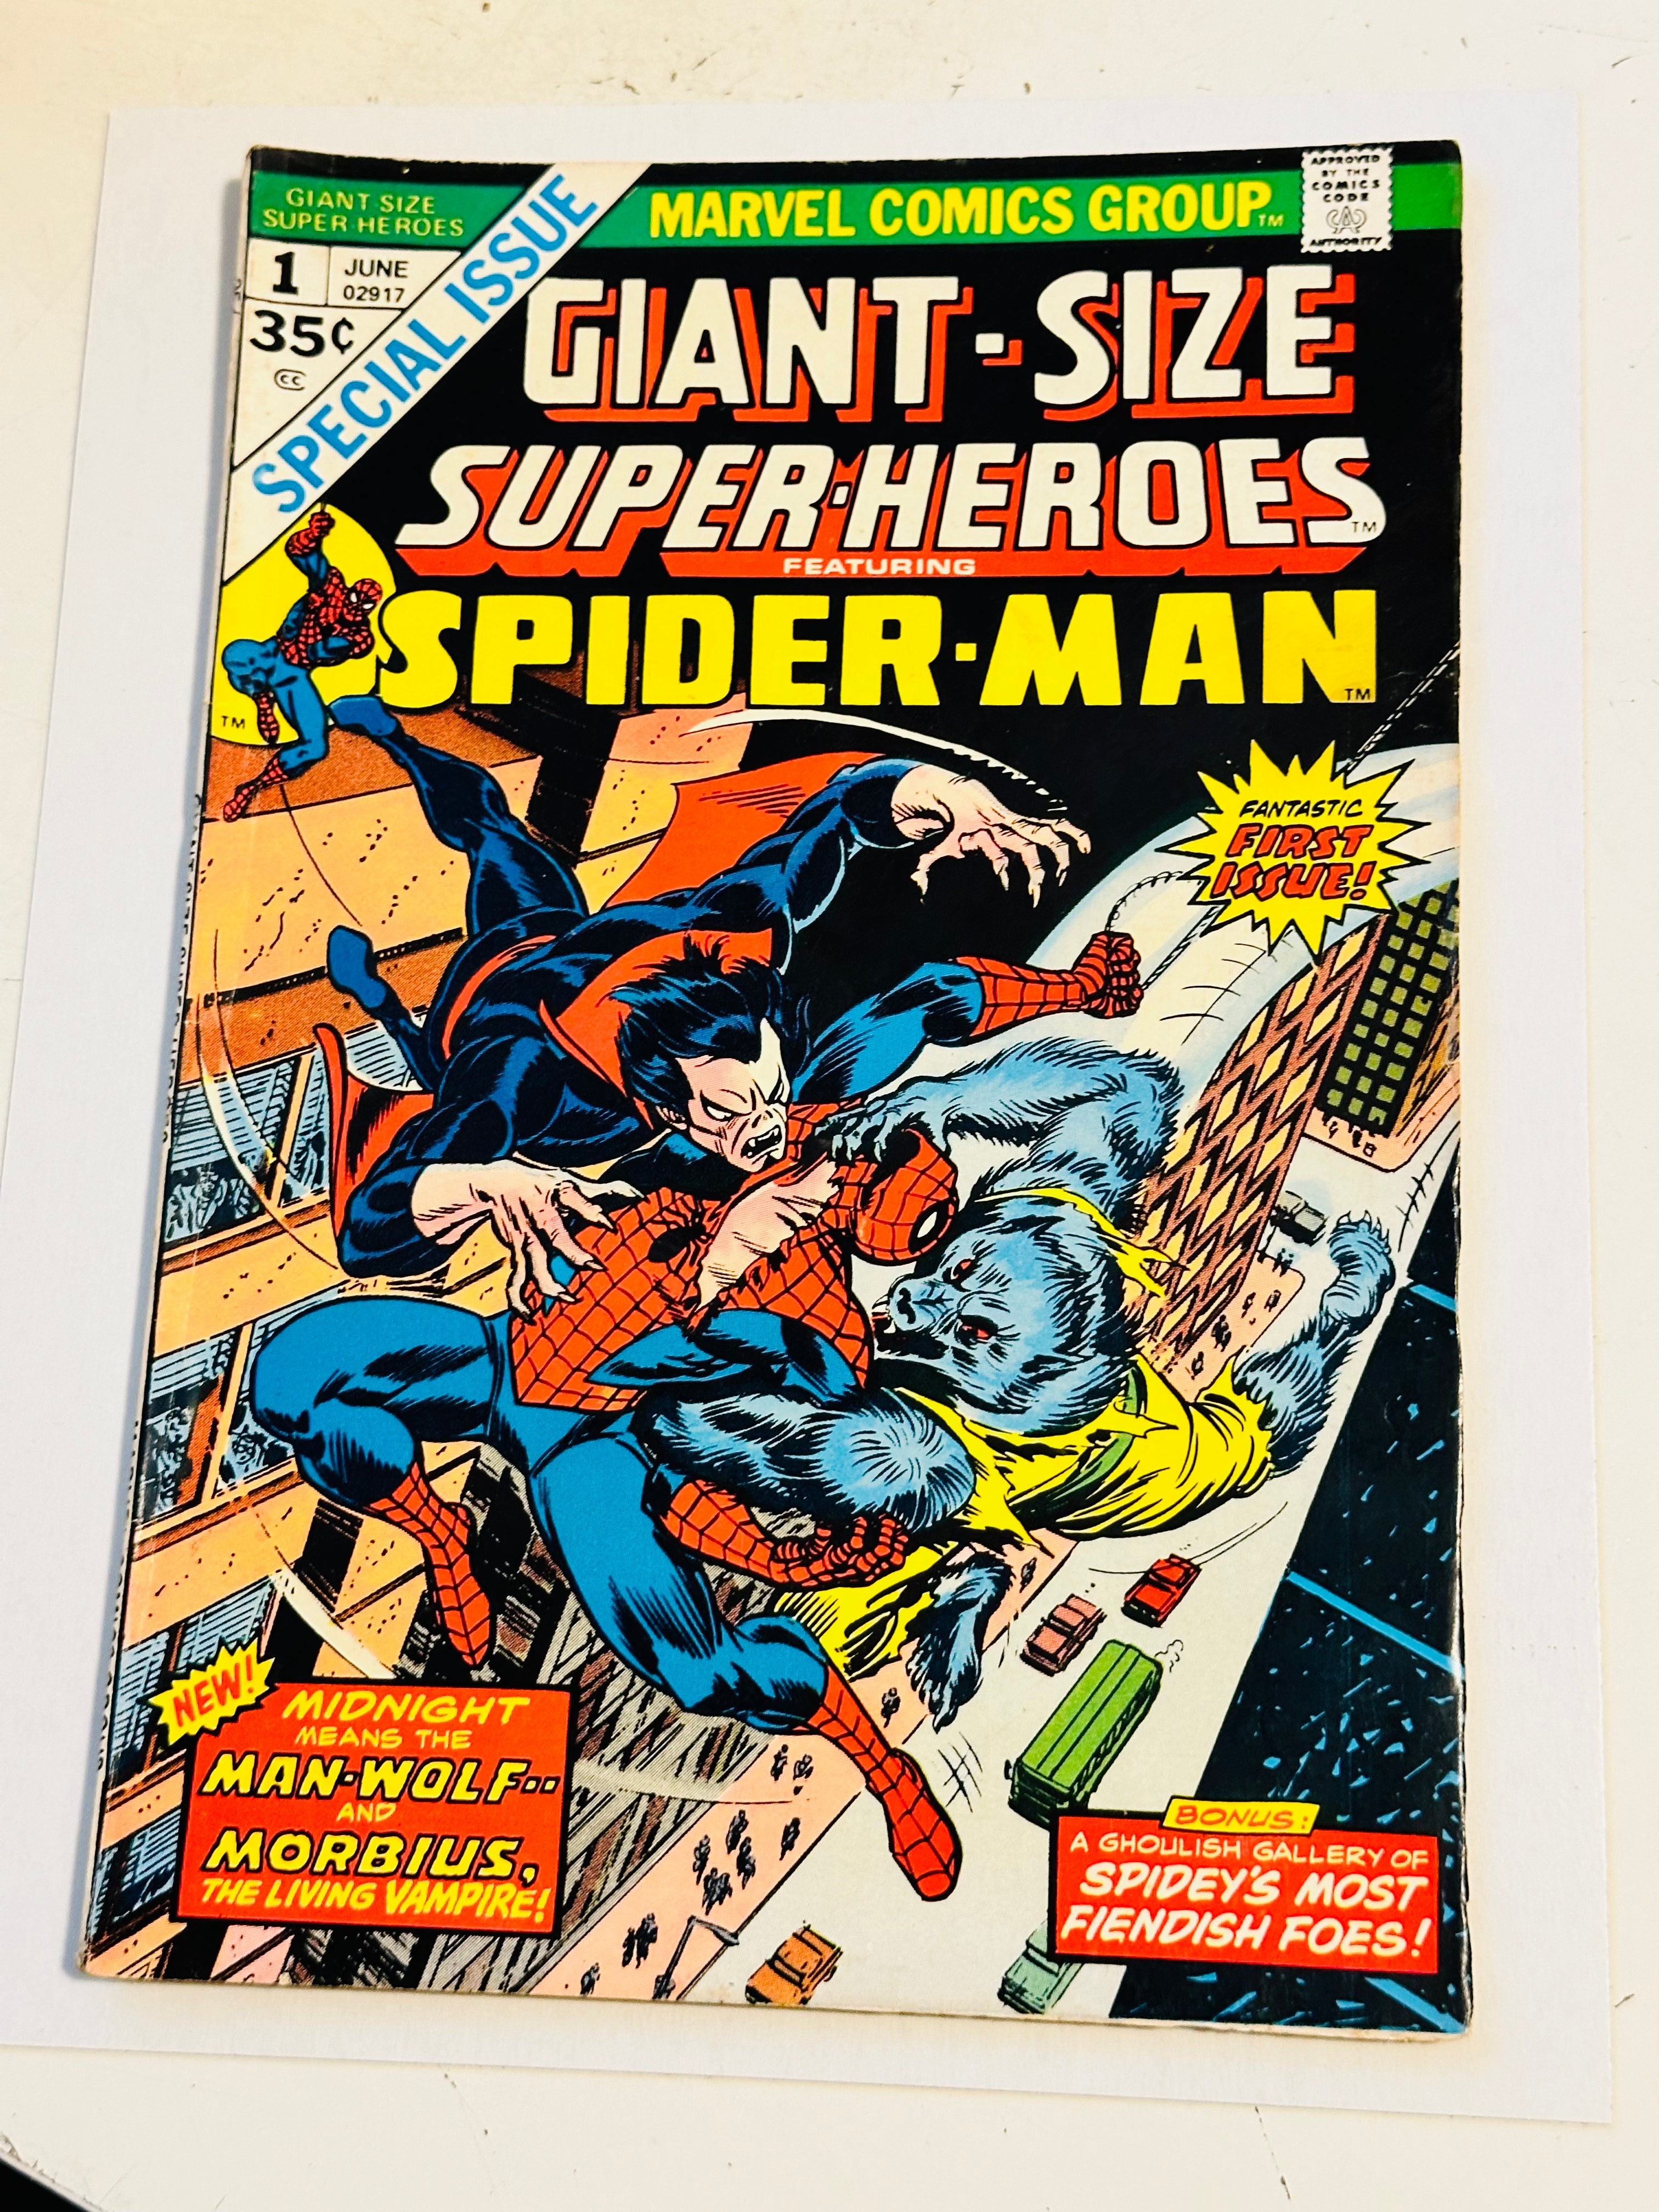 Giant size superheroes #1 Spider-man Morbius, Werewolf comic book 1975